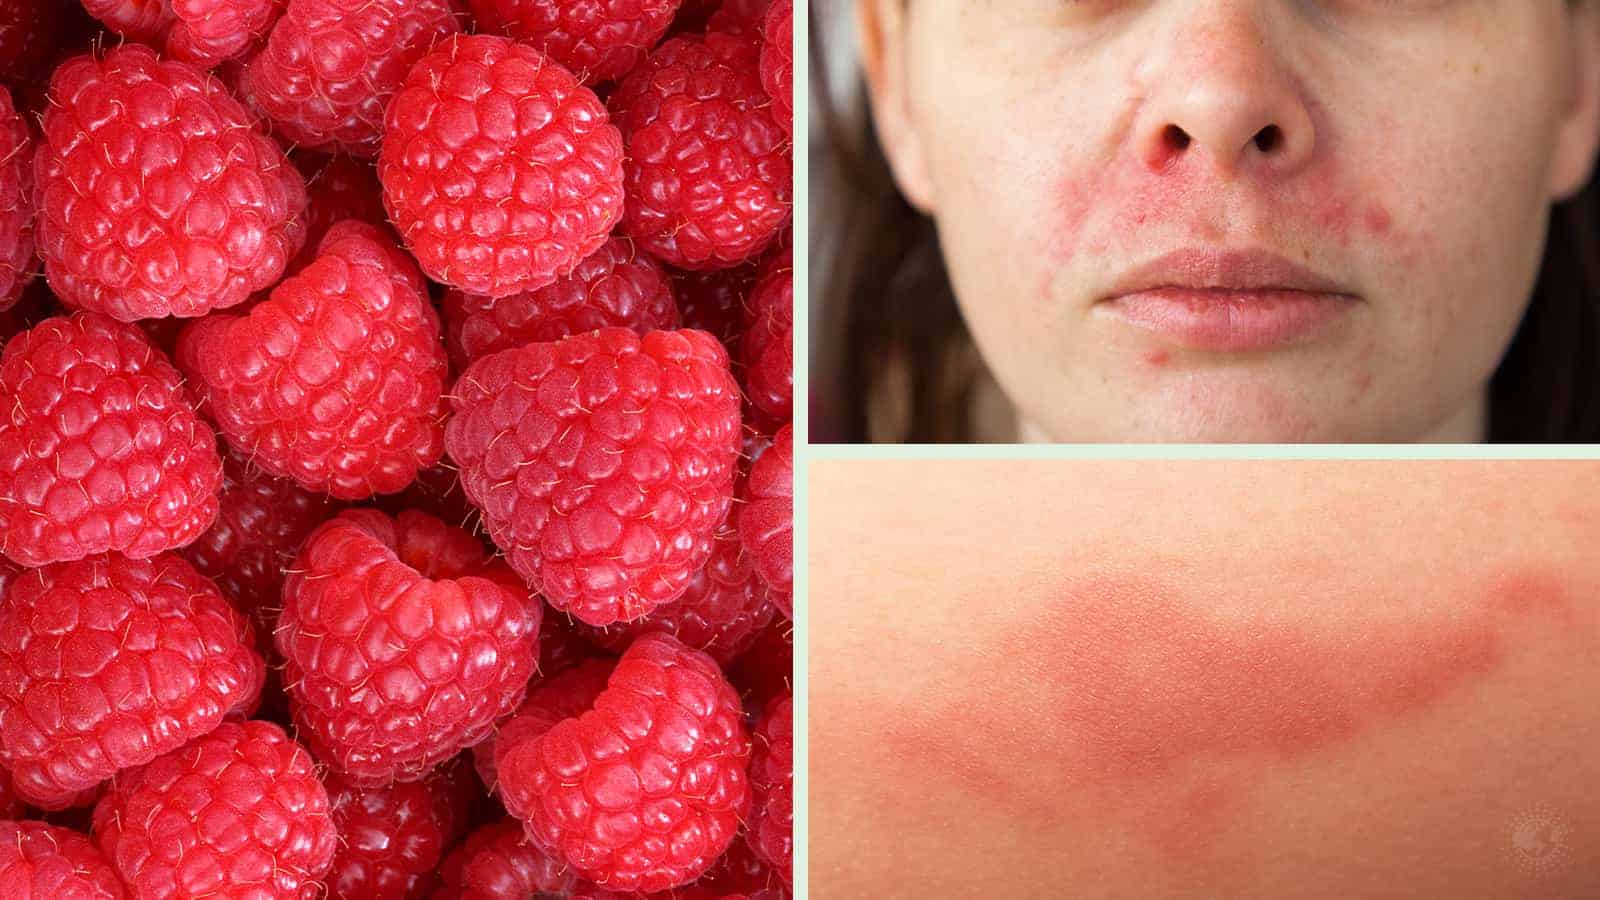 Study Reveals Raspberries Can Help Reduce Skin Inflammation